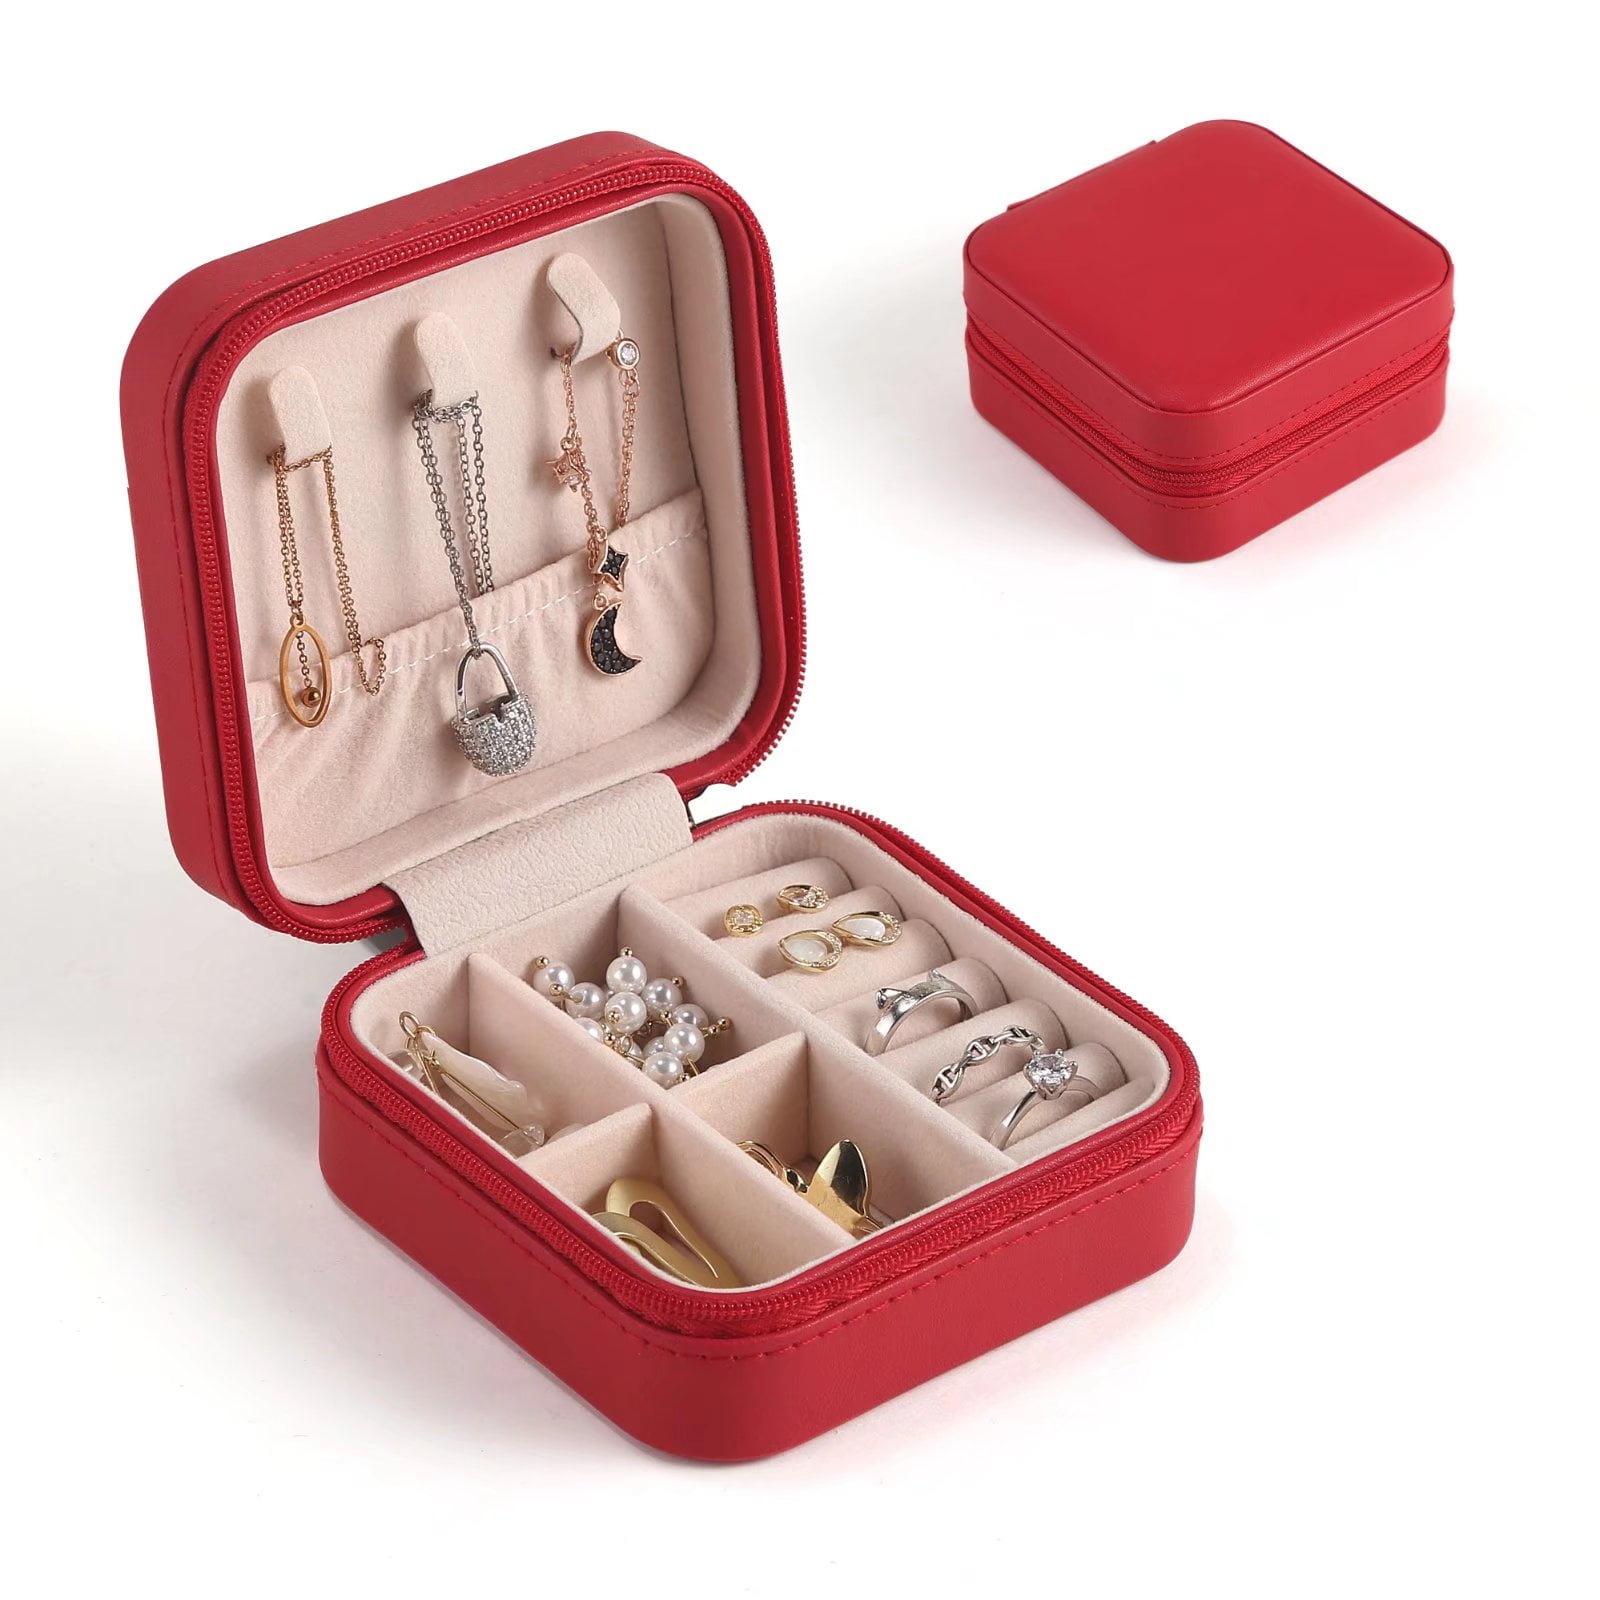 Details about   Jewelry Box Organizer Portable Travel Ornaments Case Trinkets Storage Box CF 